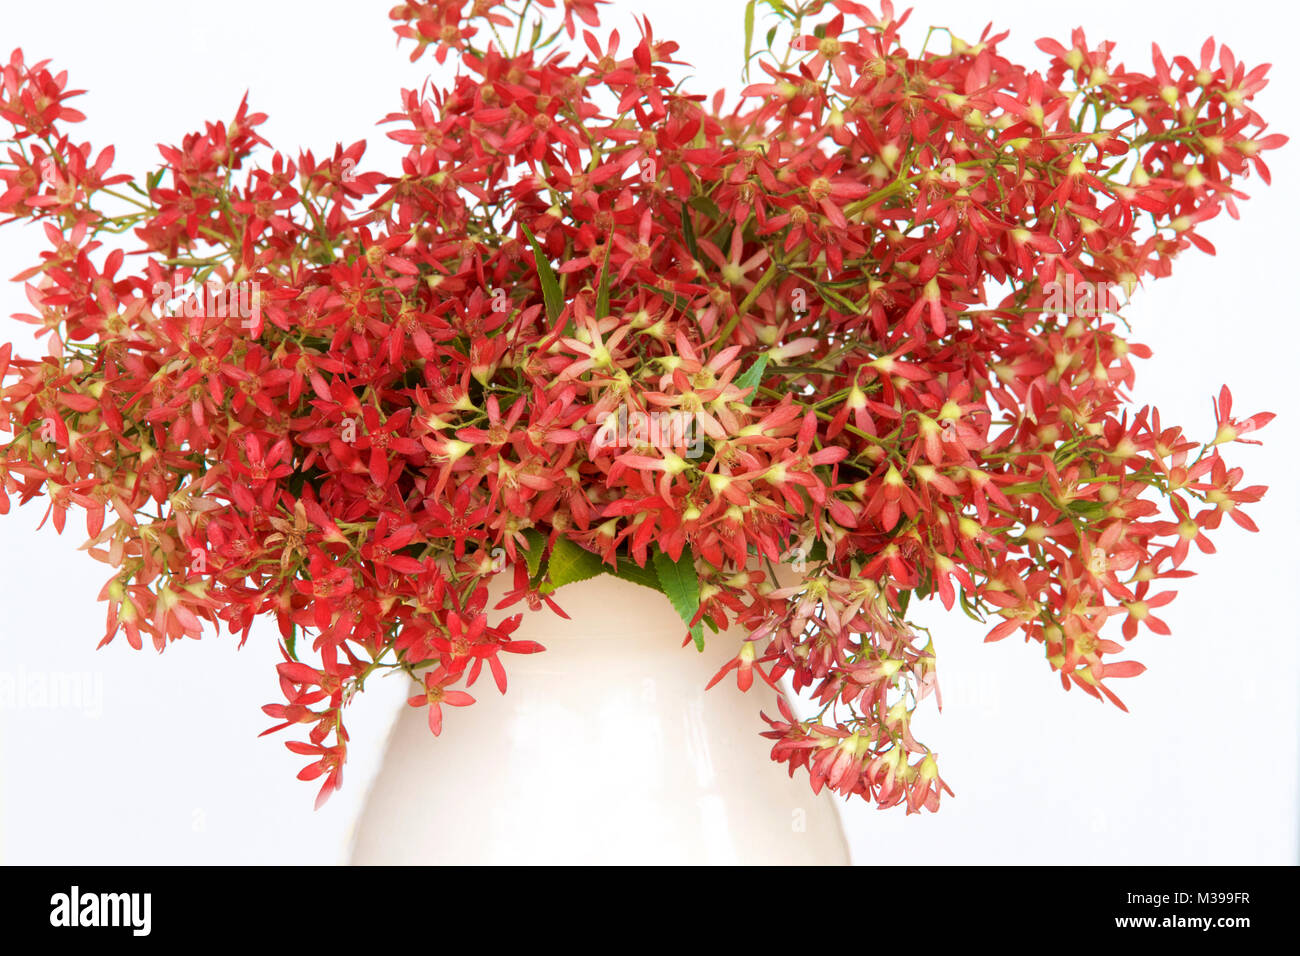 Australian Christmas bush flowers Stock Photo - Alamy